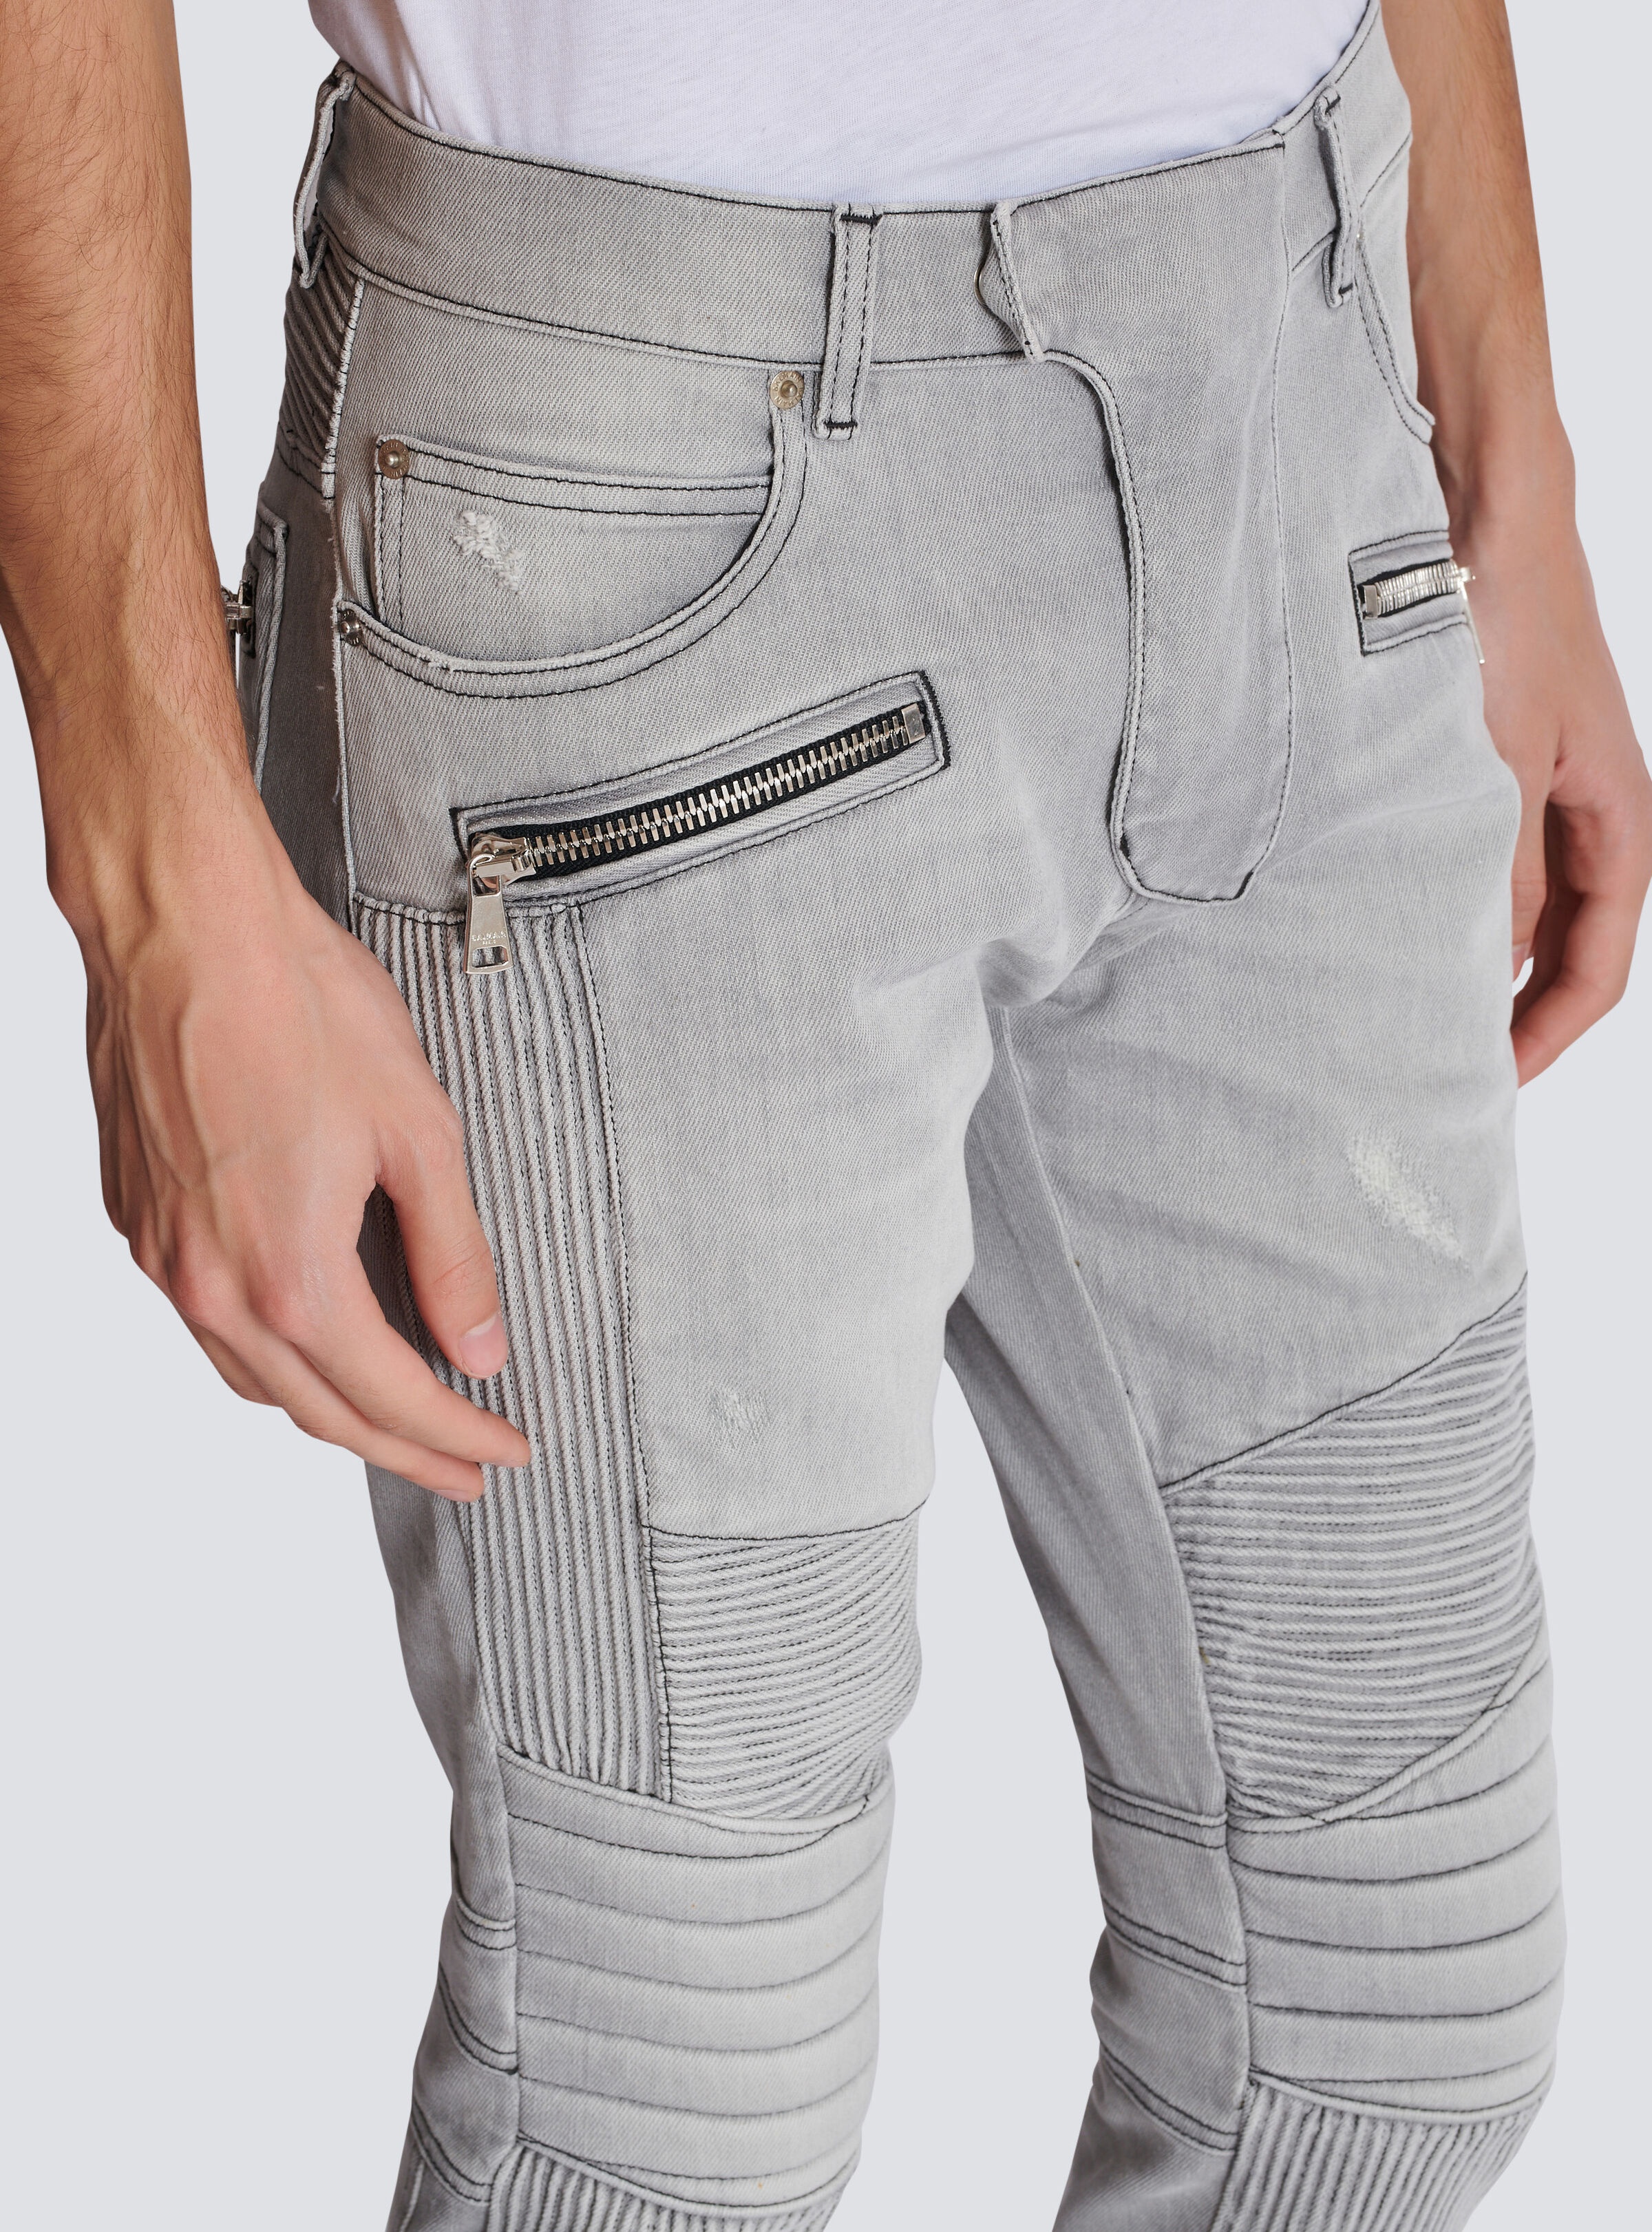 Biker jeans in Grey quilted denim - 6